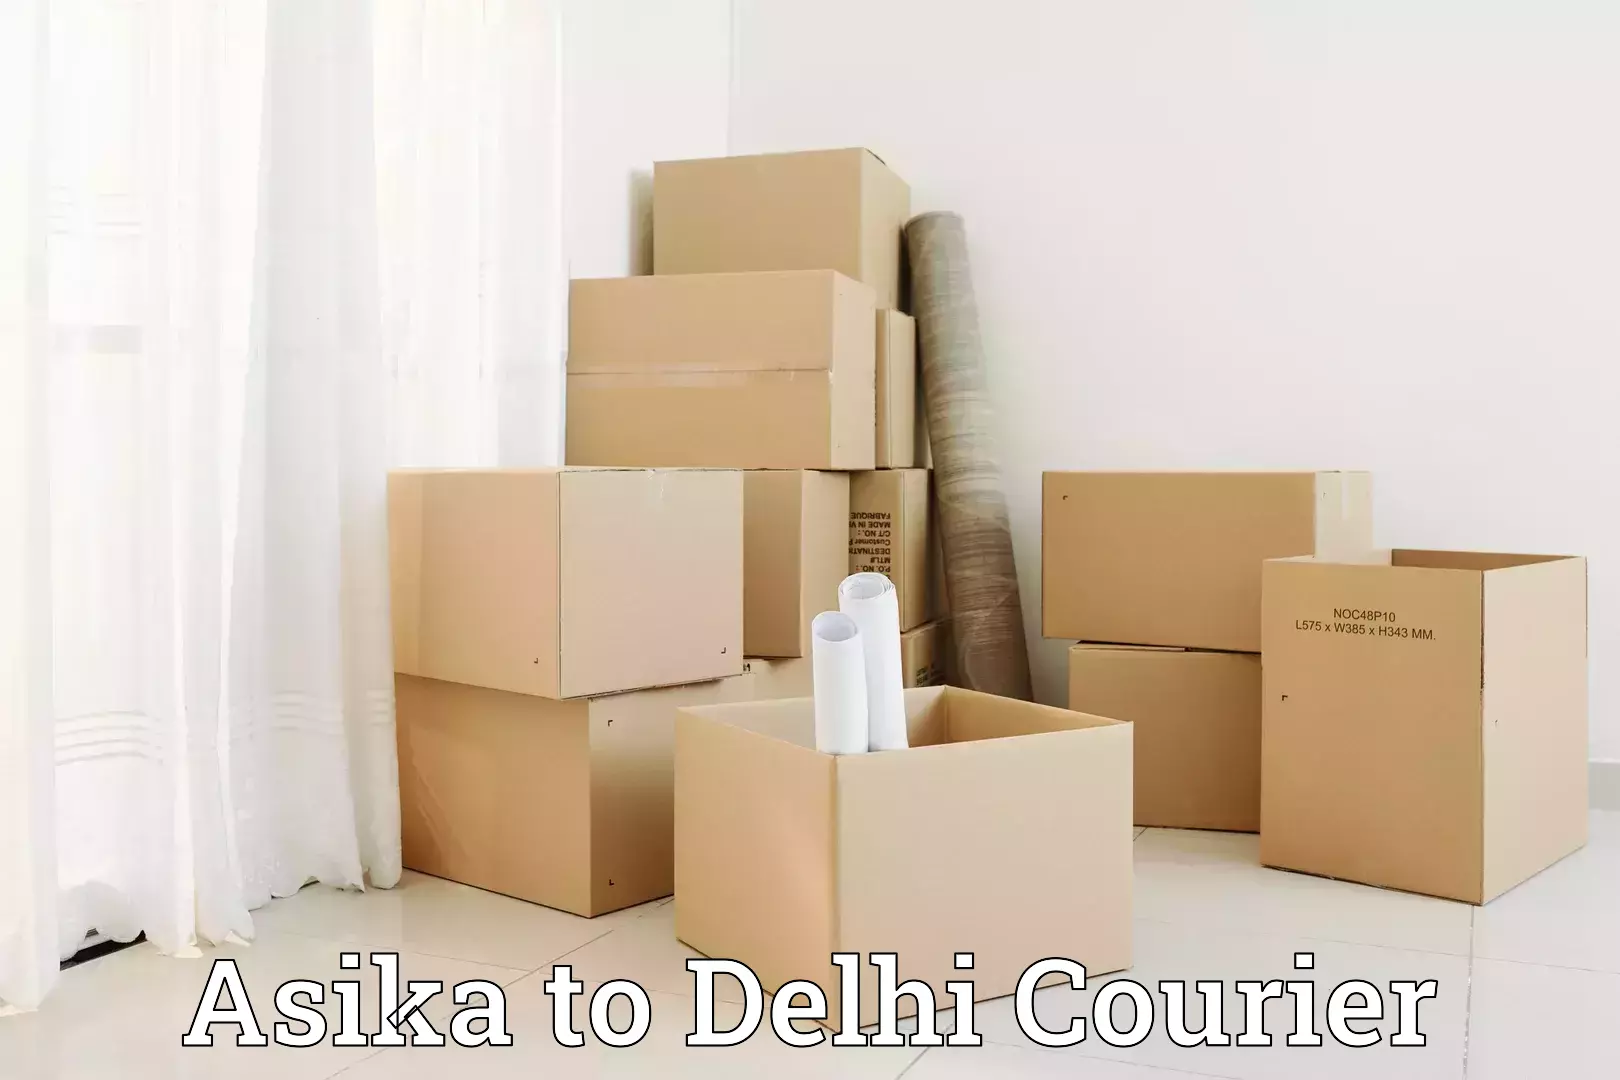 Furniture delivery service Asika to Delhi